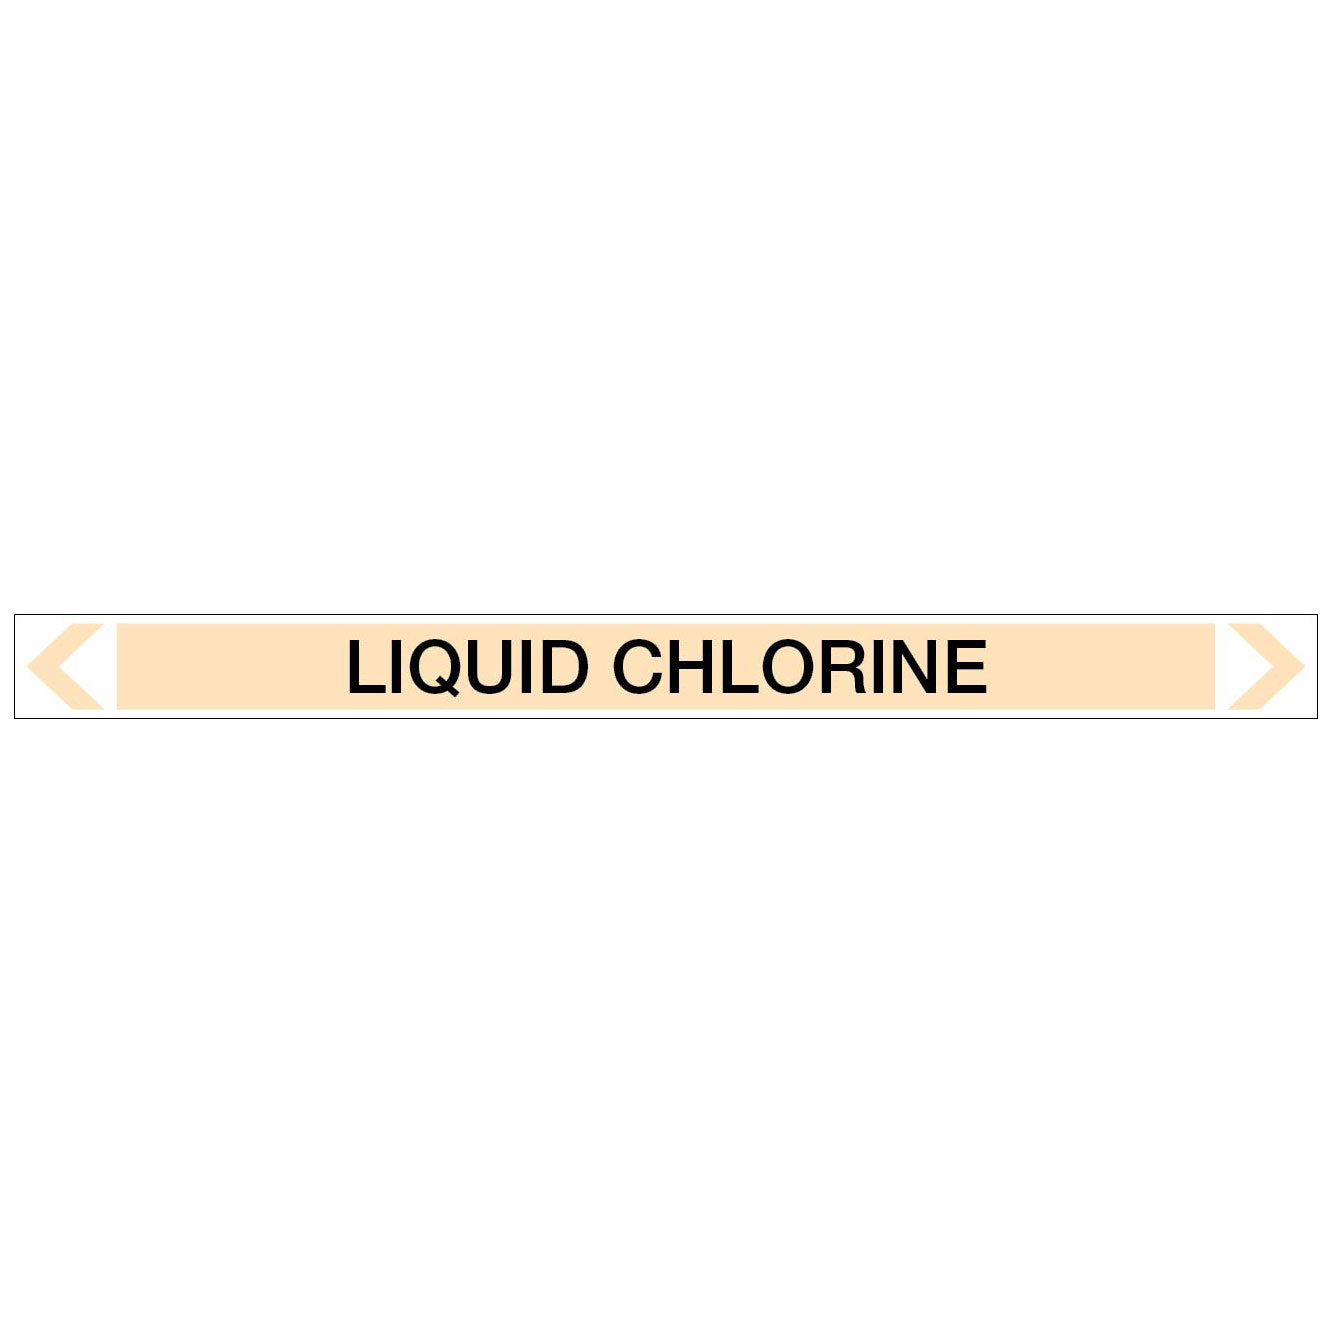 Gases - Liquid Chlorine - Pipe Marker Sticker